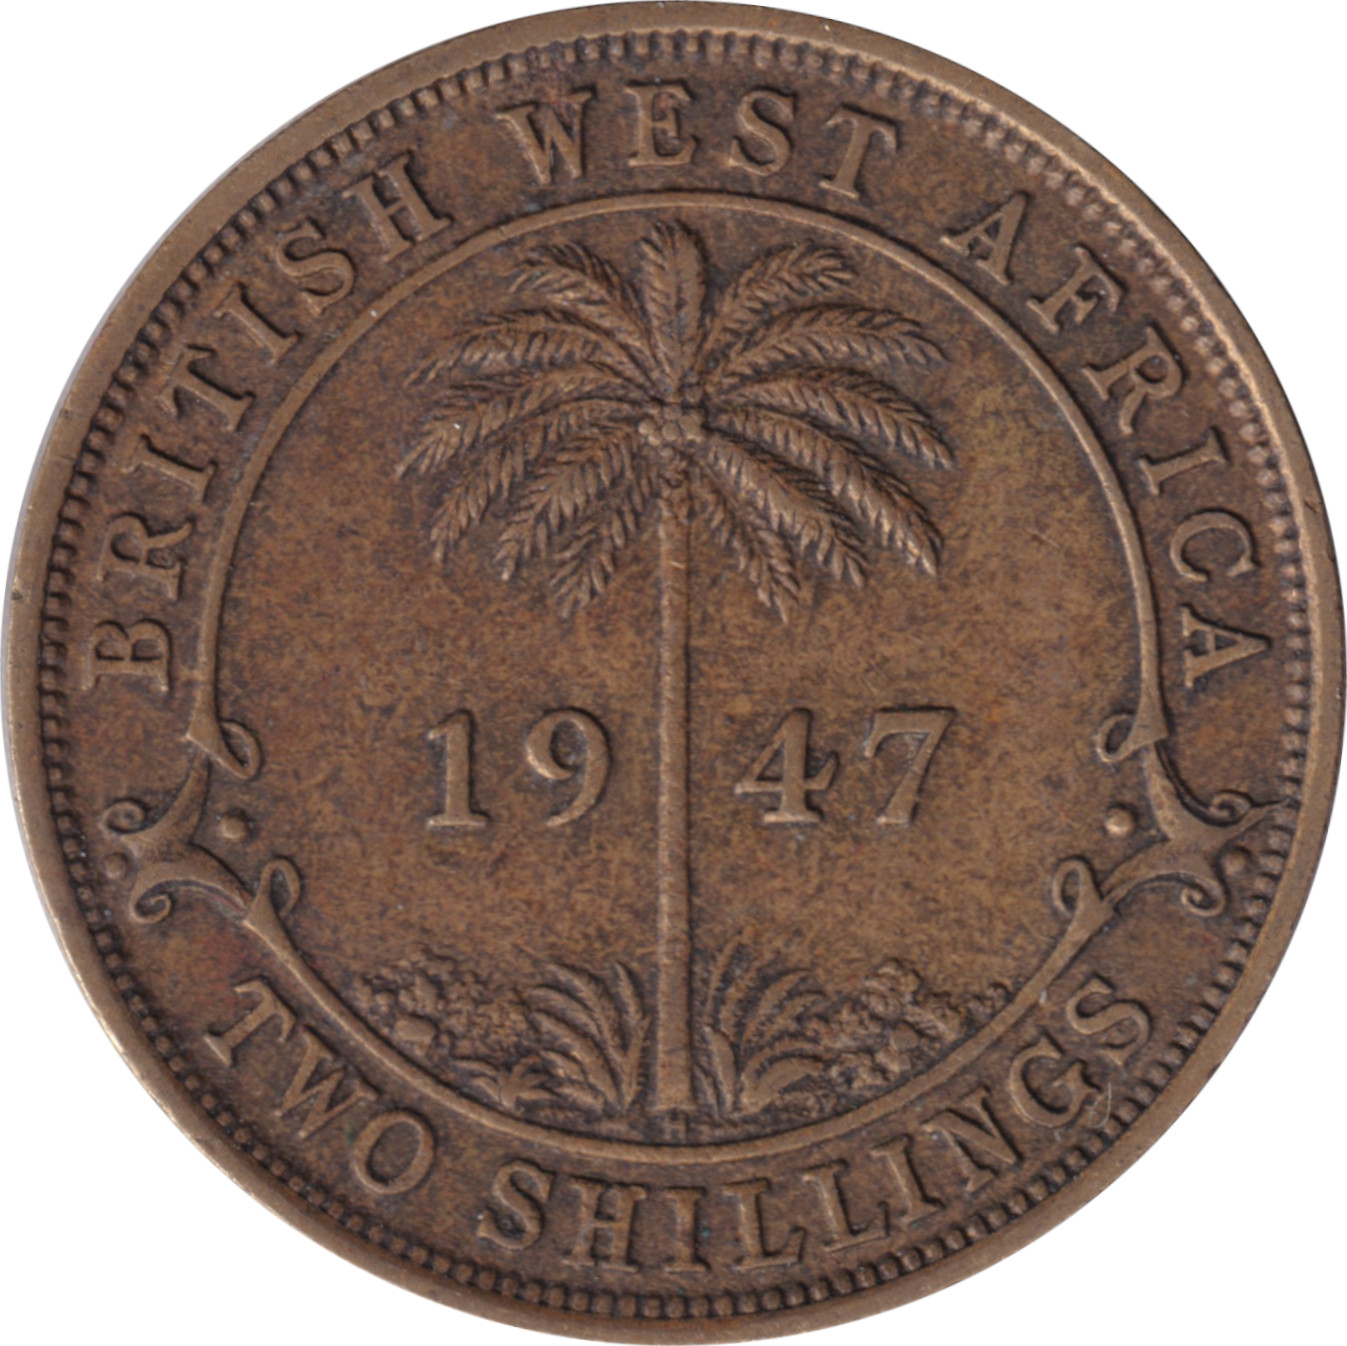 2 shillings - George VI